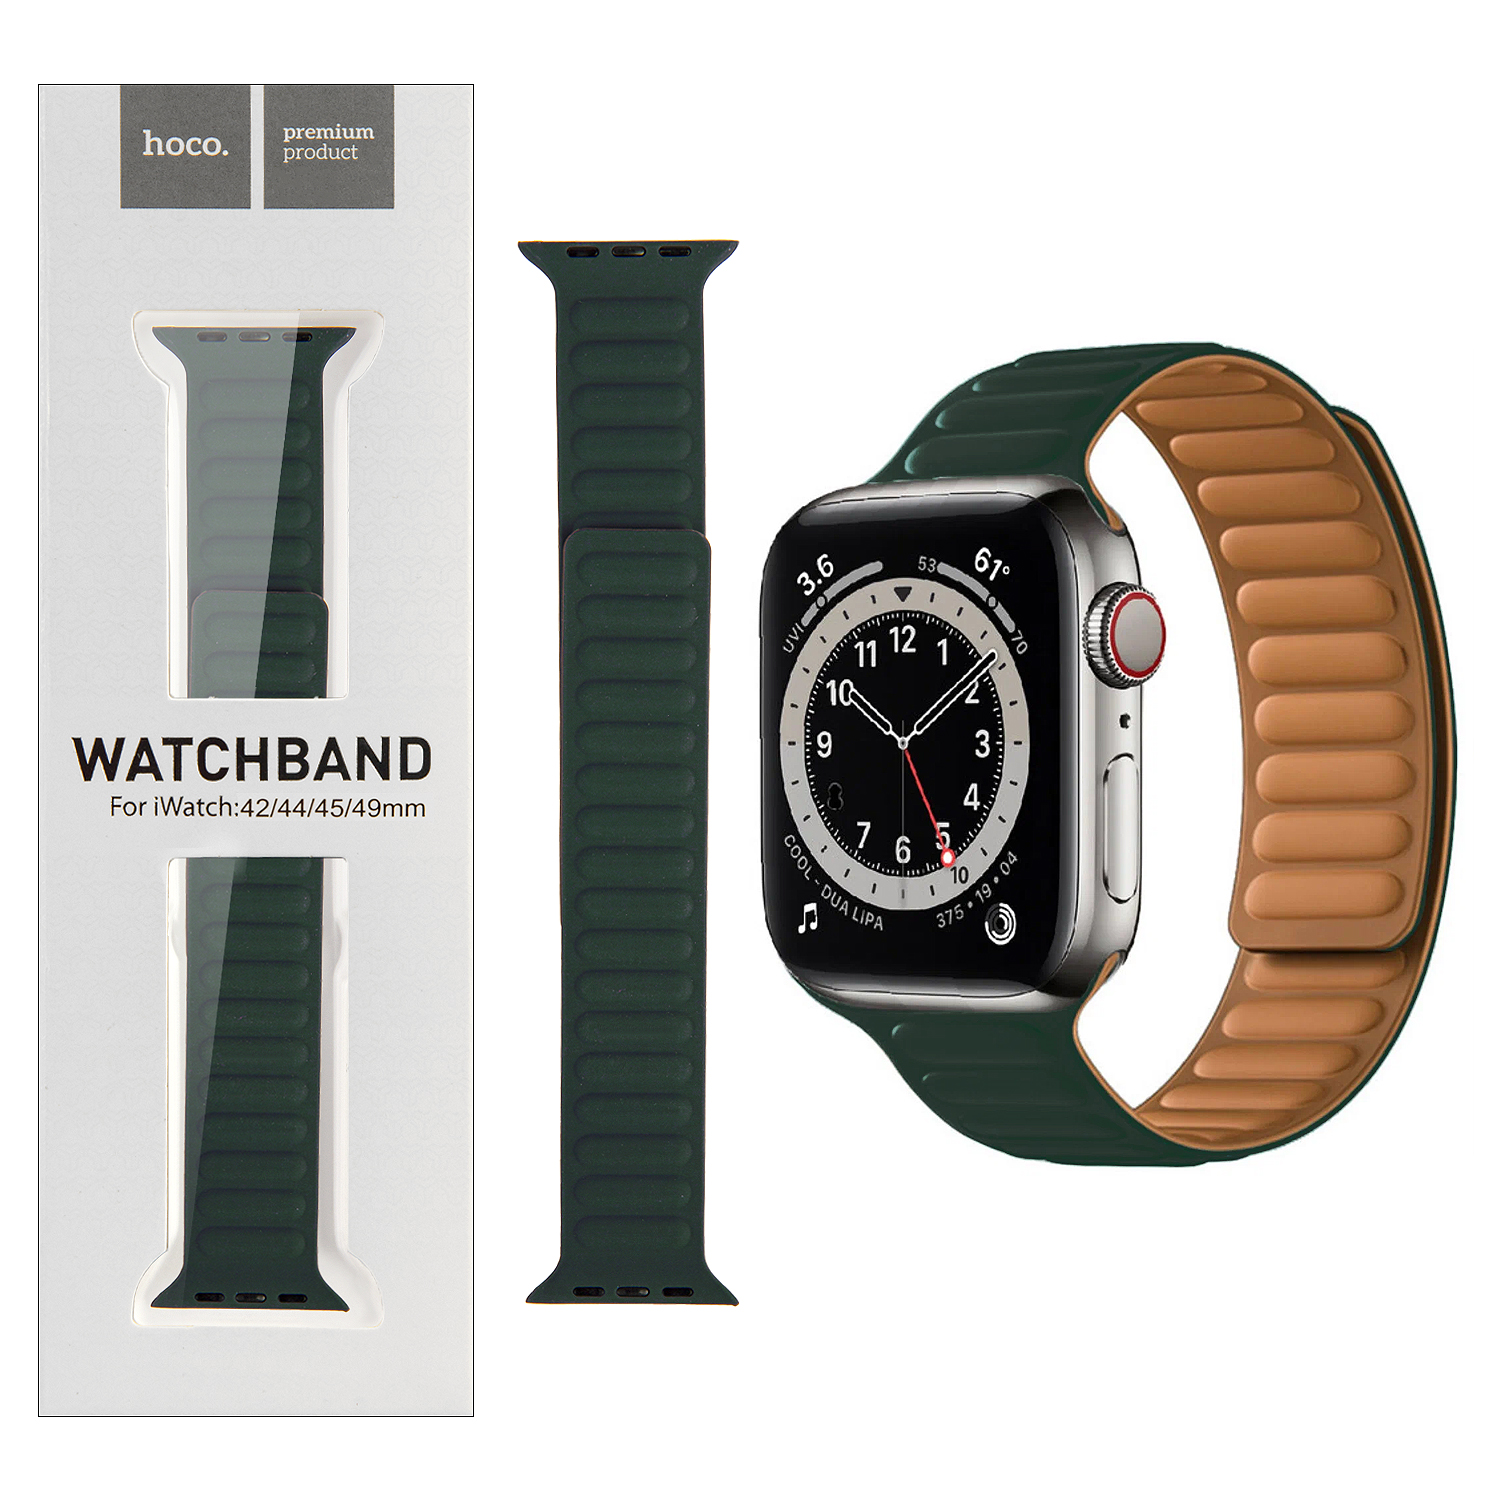 Ремешок для Apl watch 42/44/45mm Watchband WA21 Flexible series silicone fir green HOCO